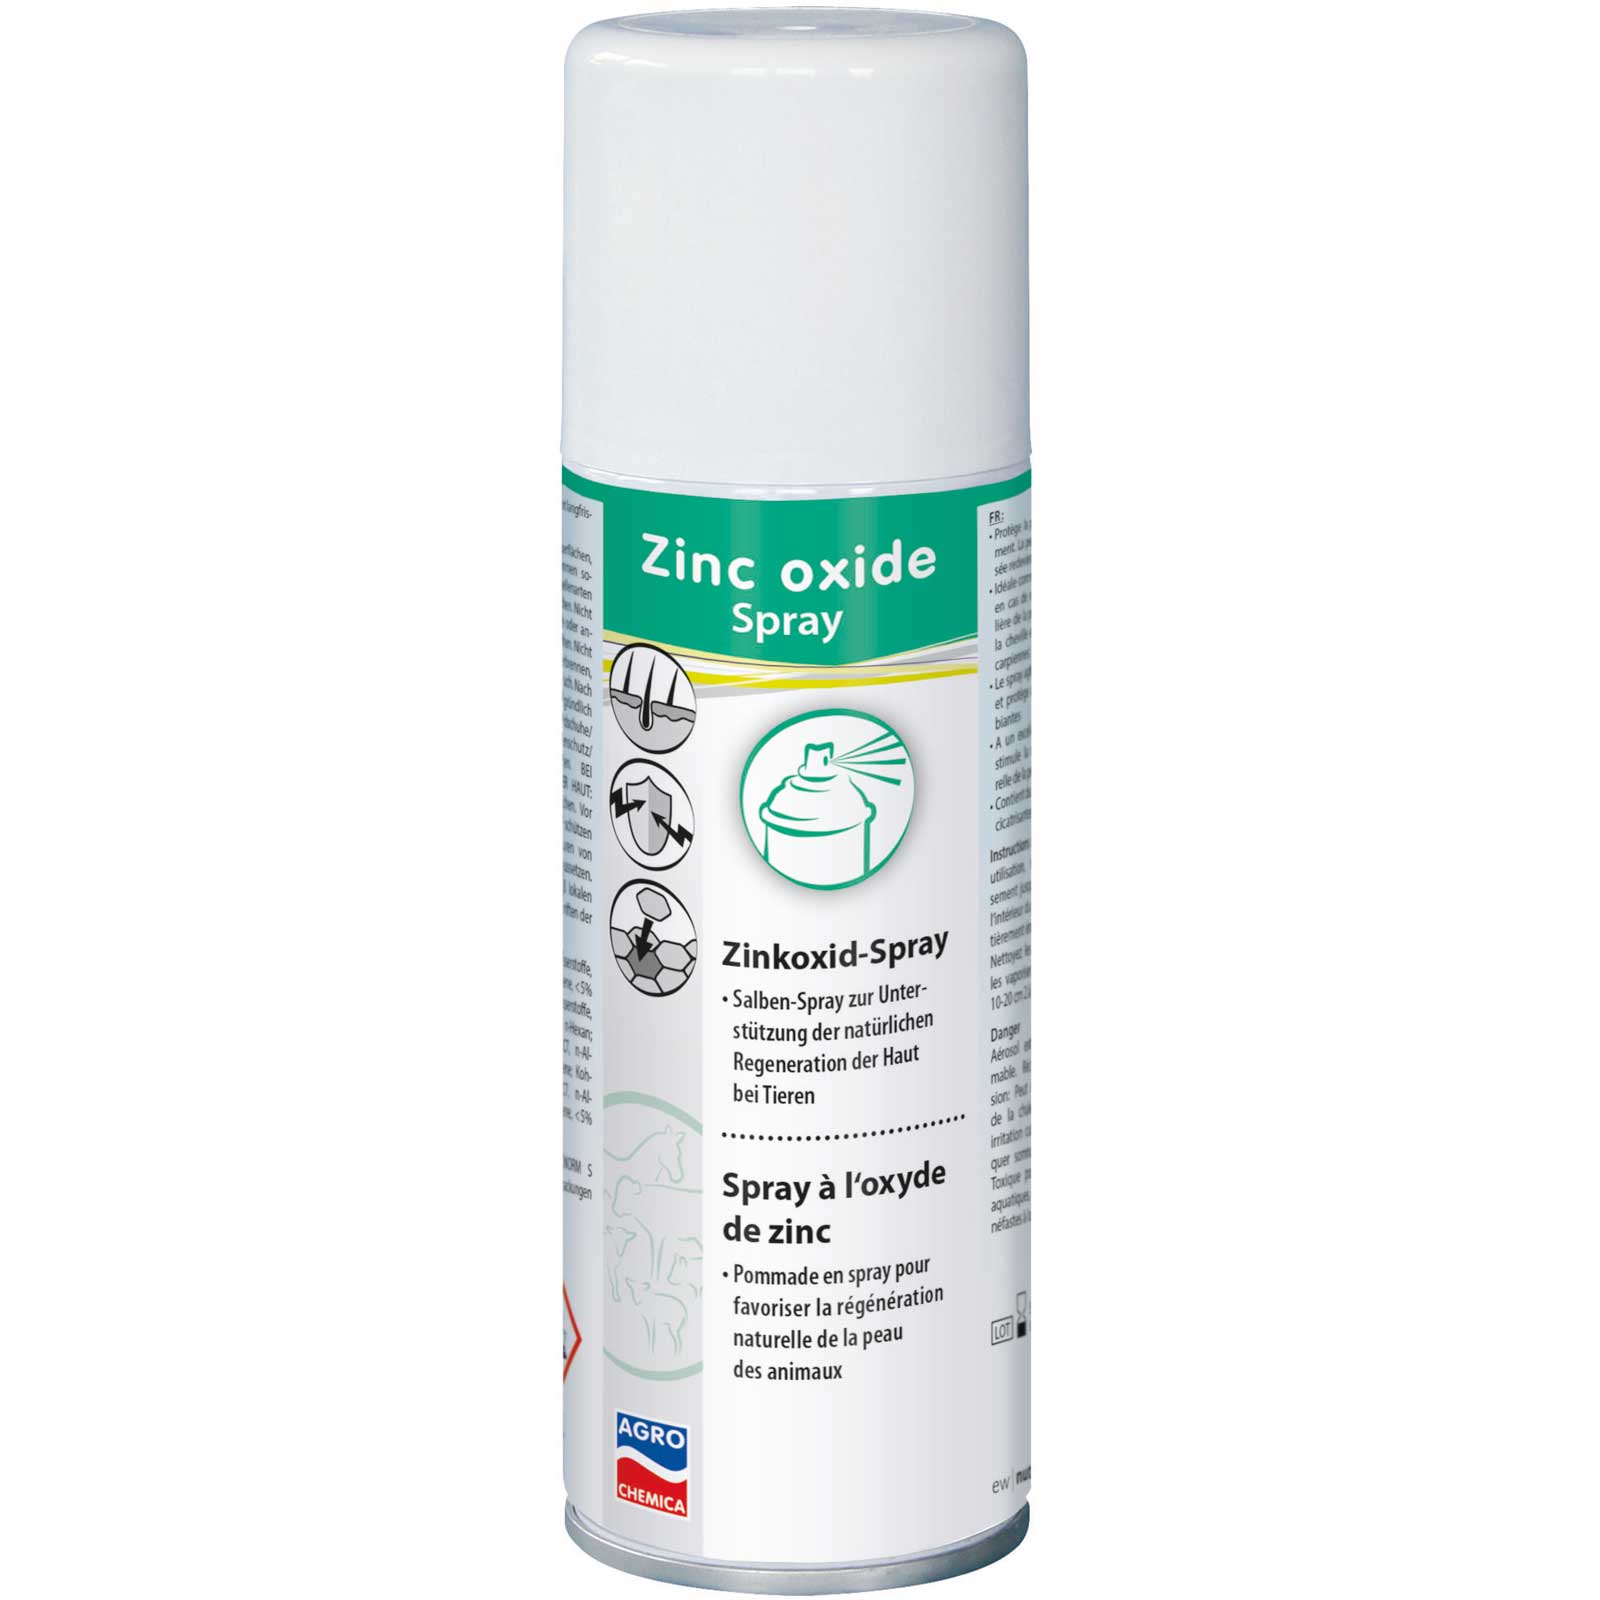 Zinc-oxide ointment spray 200 ml